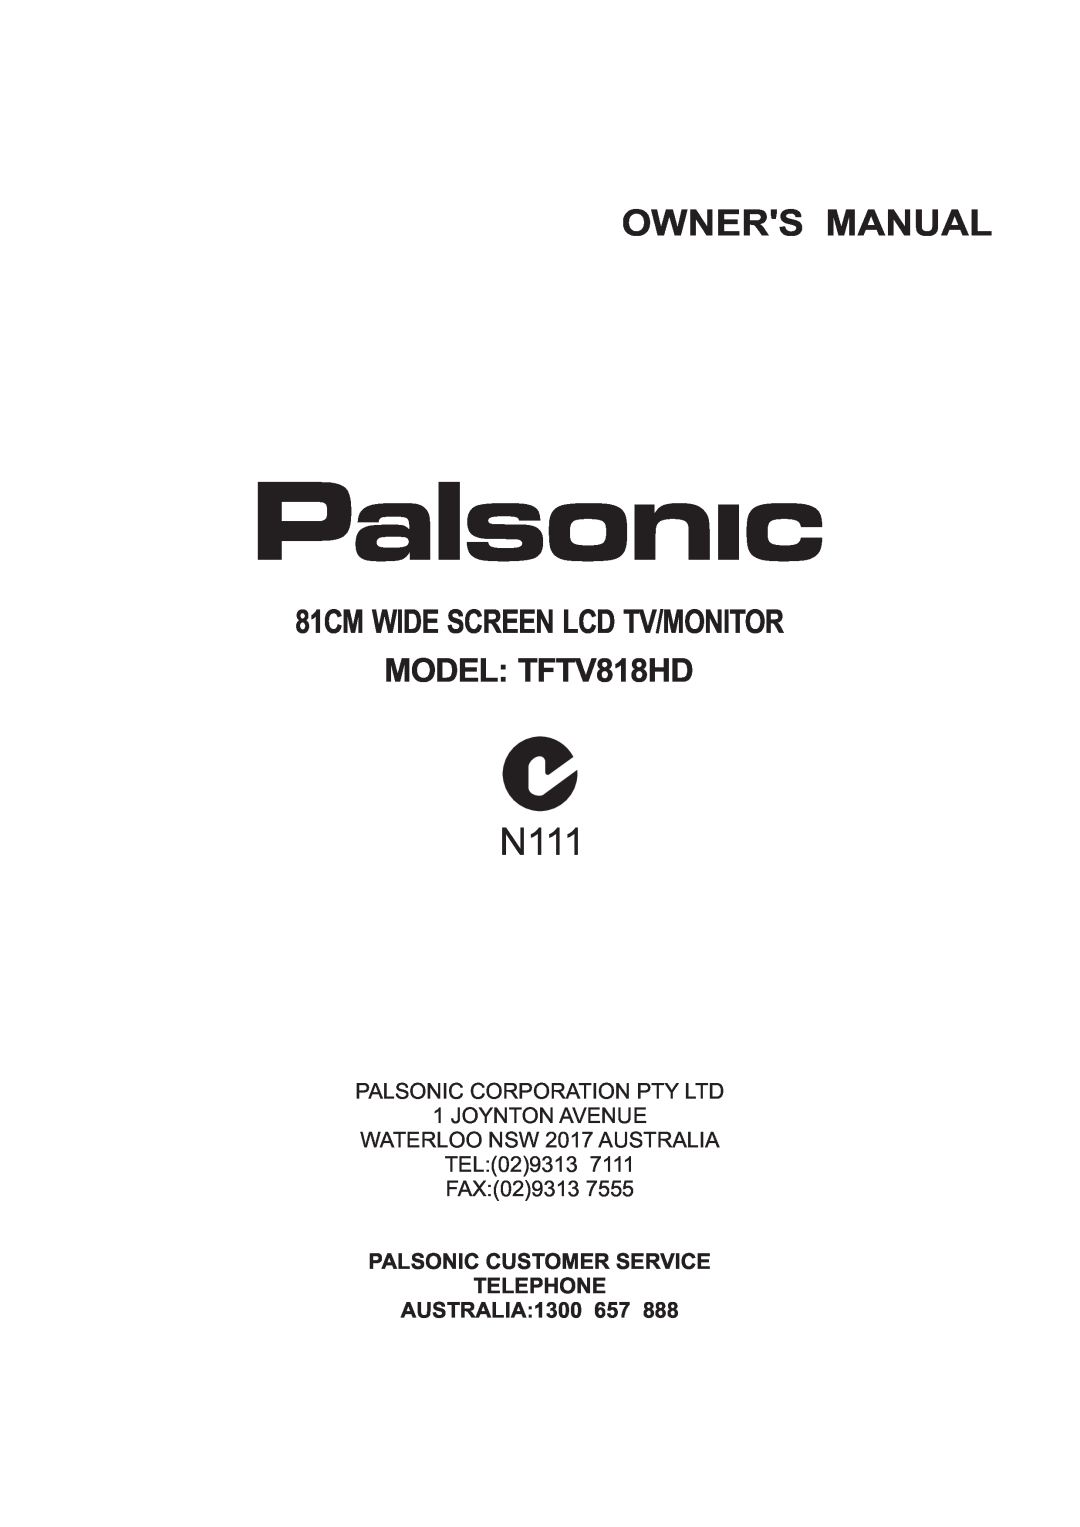 Palsonic owner manual 81CM WIDE SCREEN LCD TV/MONITOR MODEL TFTV818HD, N111, Owners Manual 